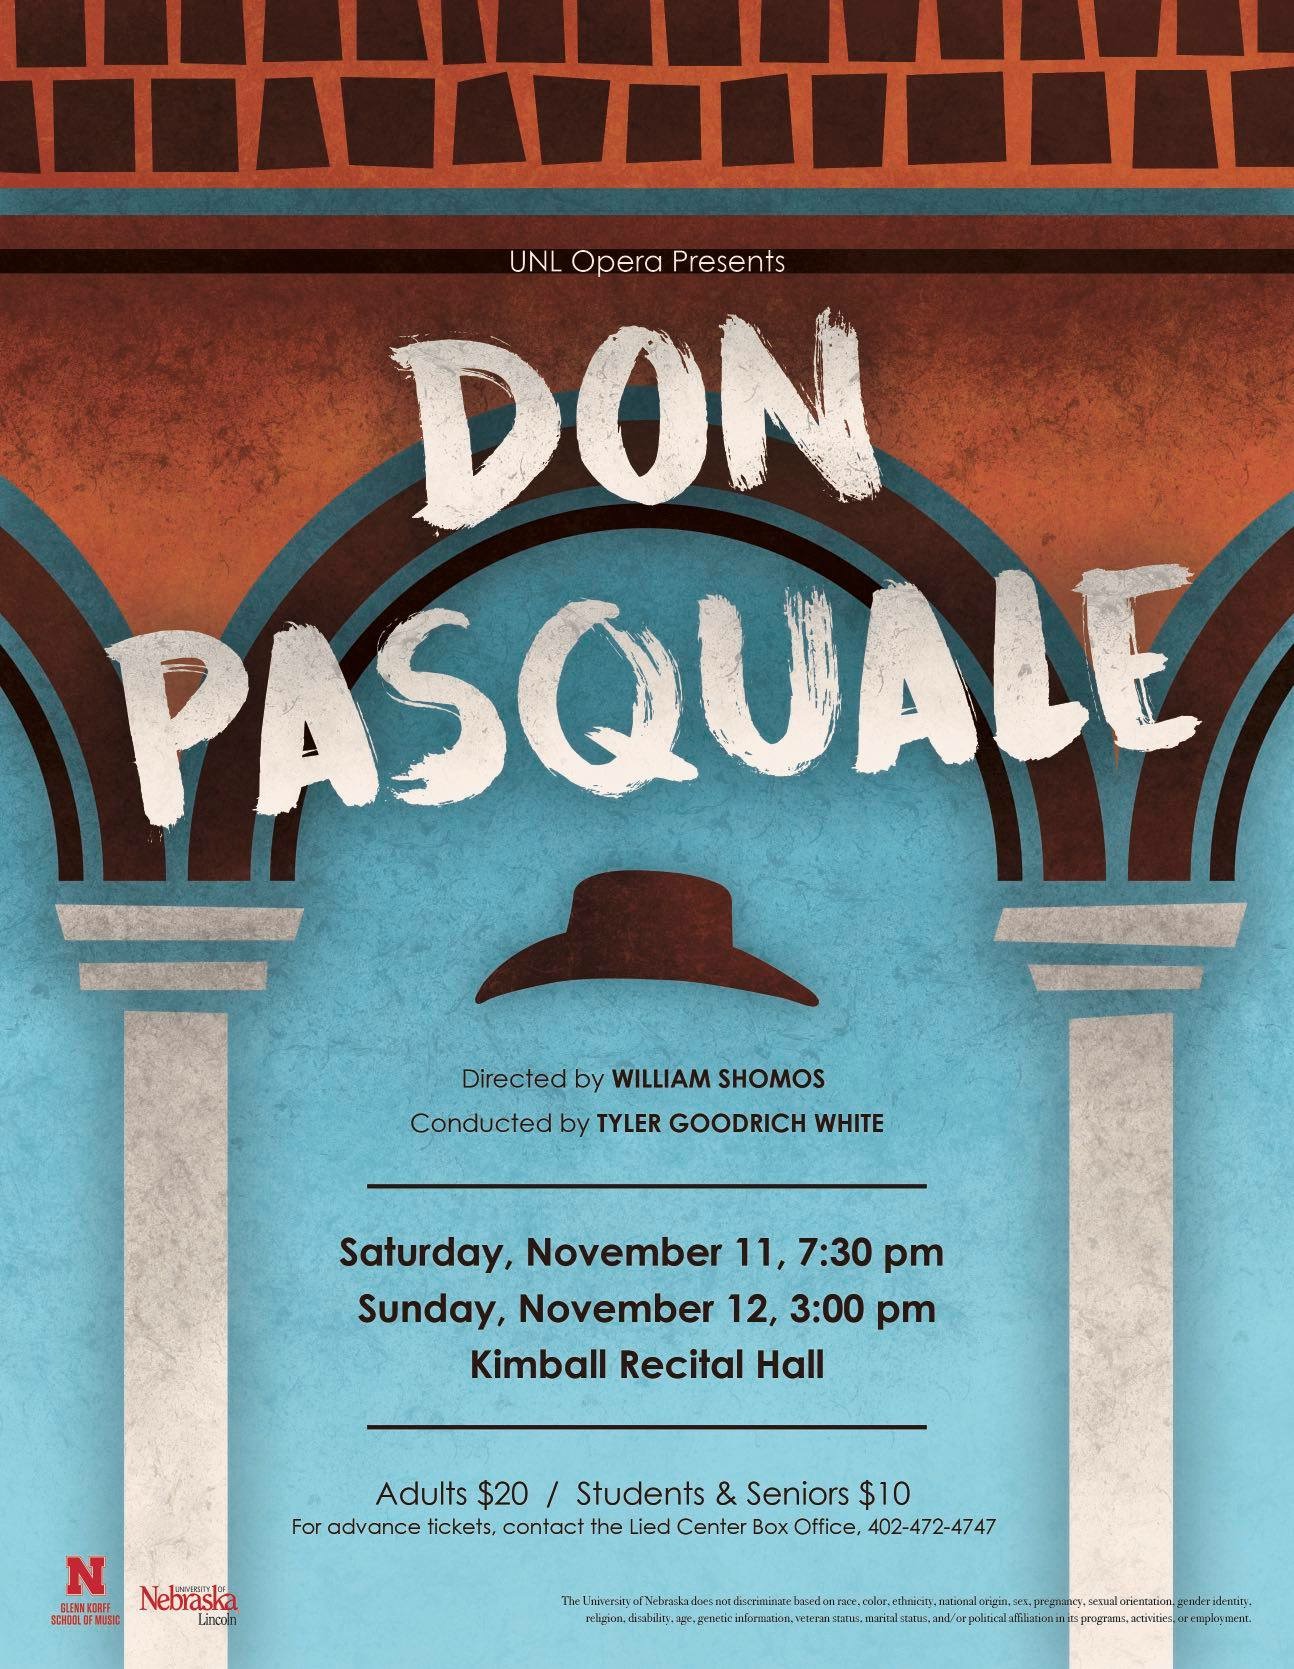 The Glenn Korff School of Music's opera program presents "Don Pasquale" Nov. 11-12 in Kimball Recital Hall.